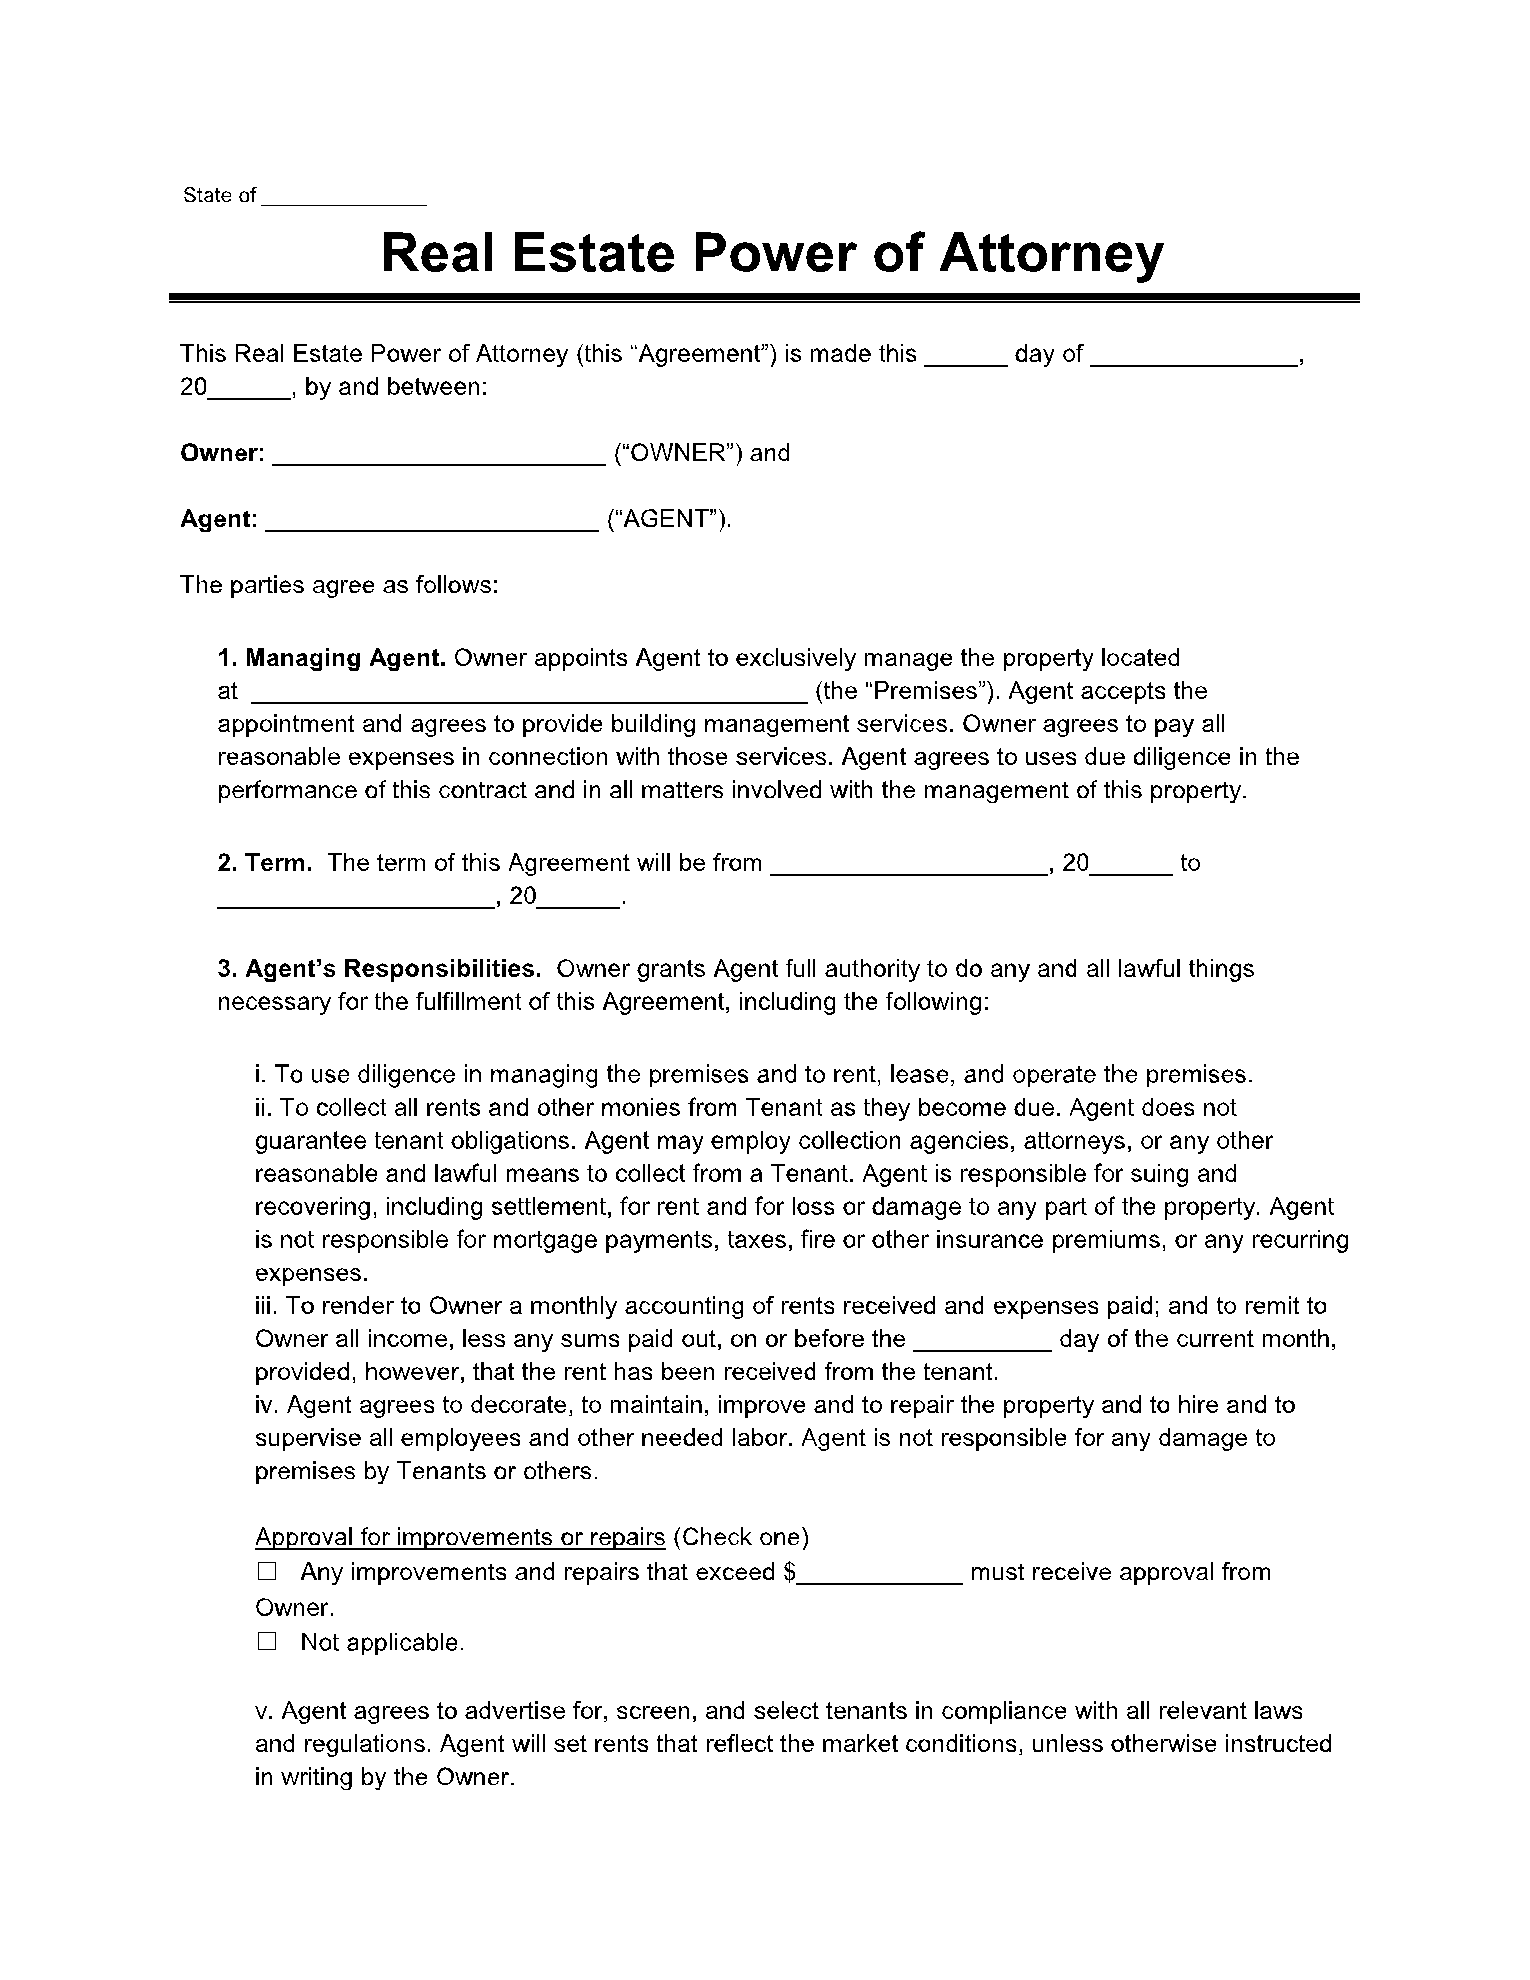 Power of Attorney in Virginia